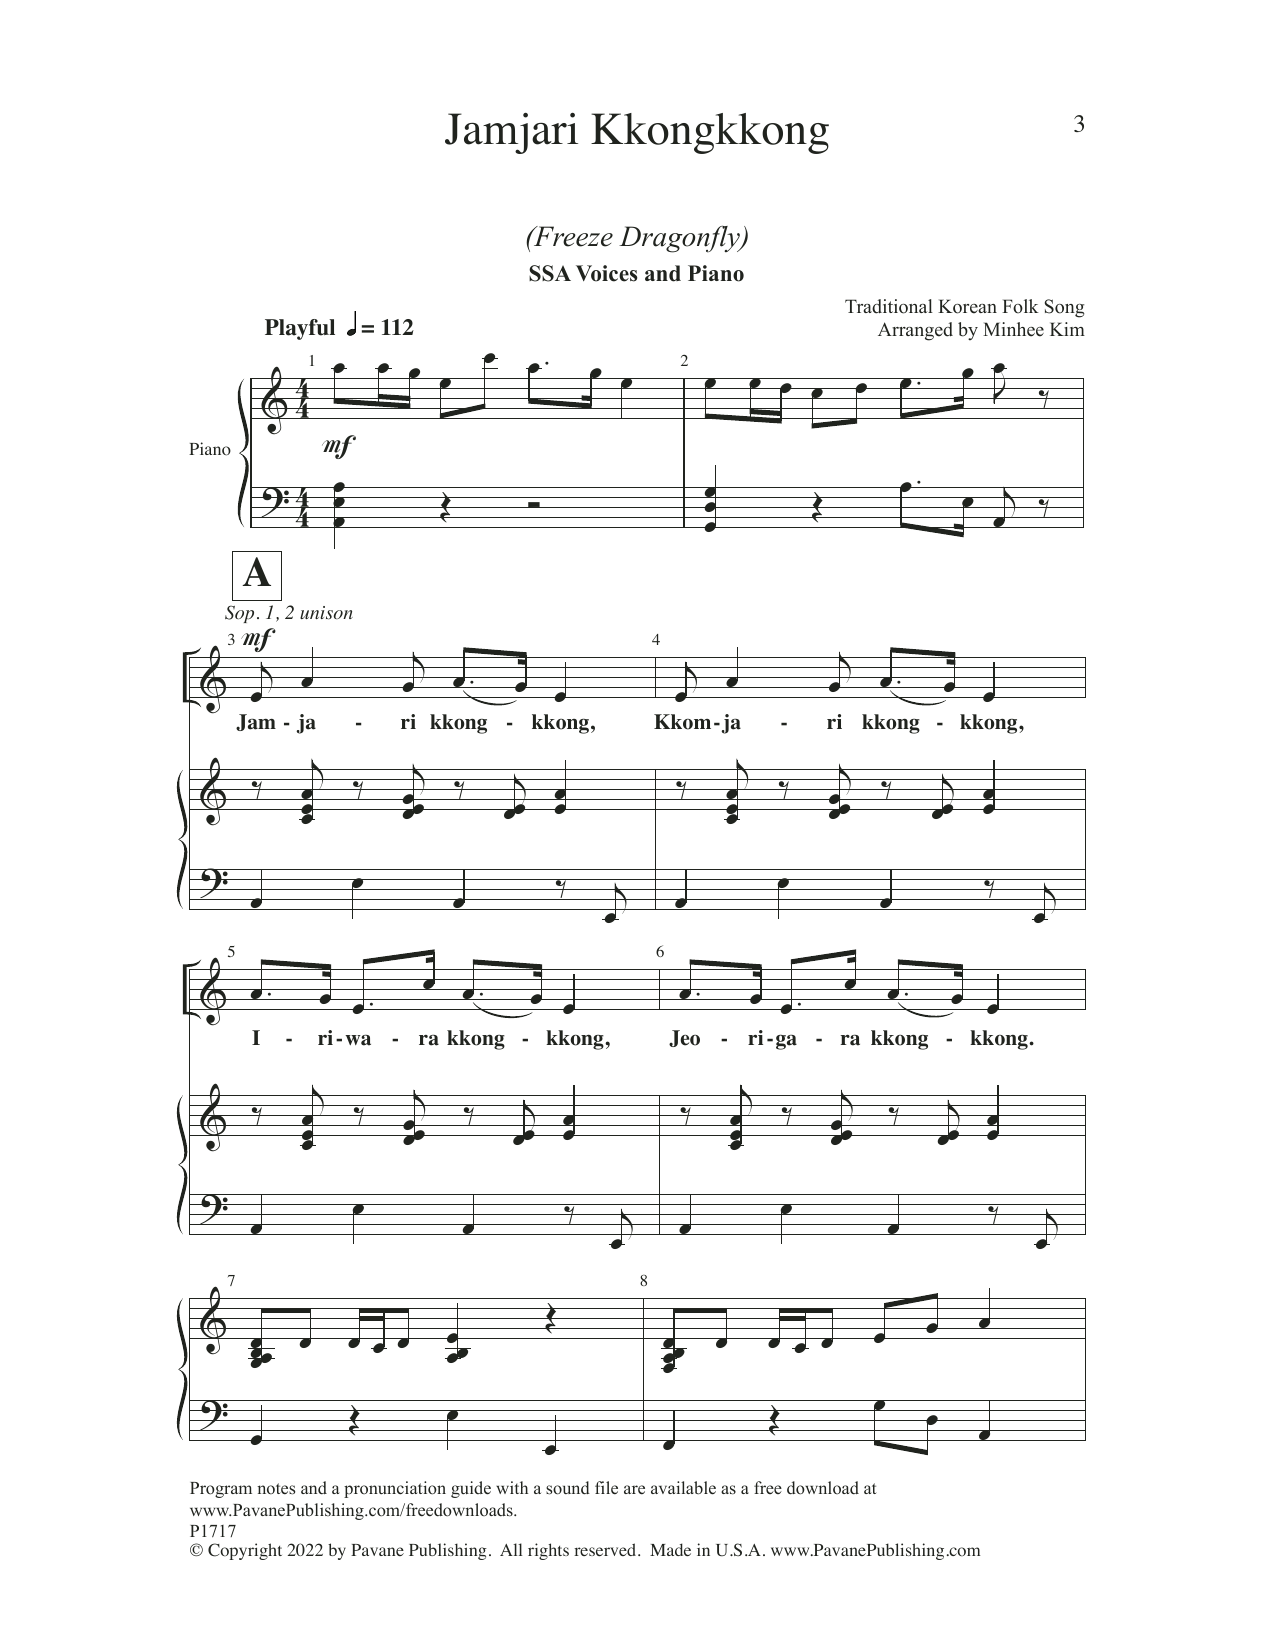 Download Traditional Korean Folk Song Jamjari Kkongkkong (Freeze Dragonfly) (arr. Minhee Kim) Sheet Music and learn how to play SSA Choir PDF digital score in minutes